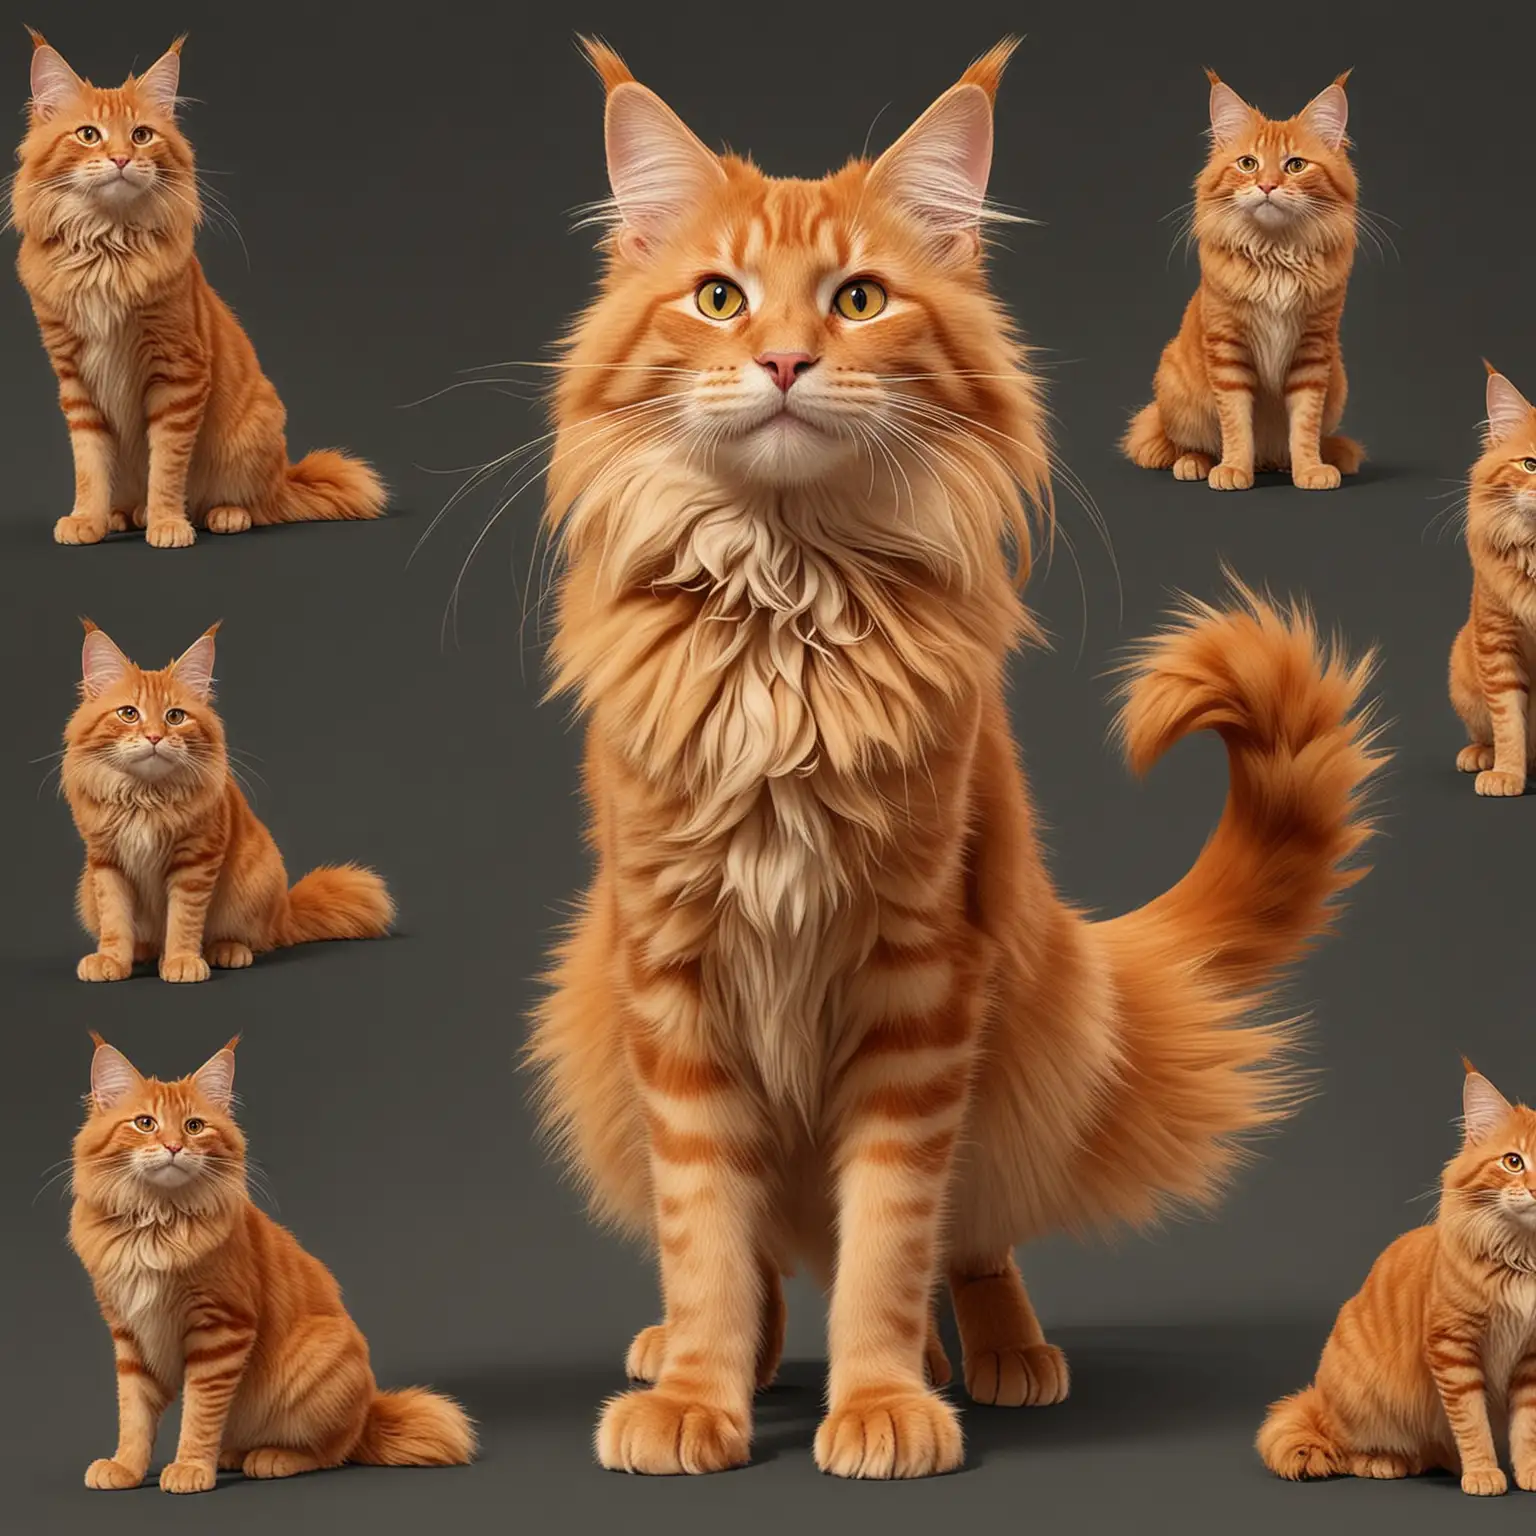 Pixar Cartoon Character Design Orange Maine Coon Cat Poses